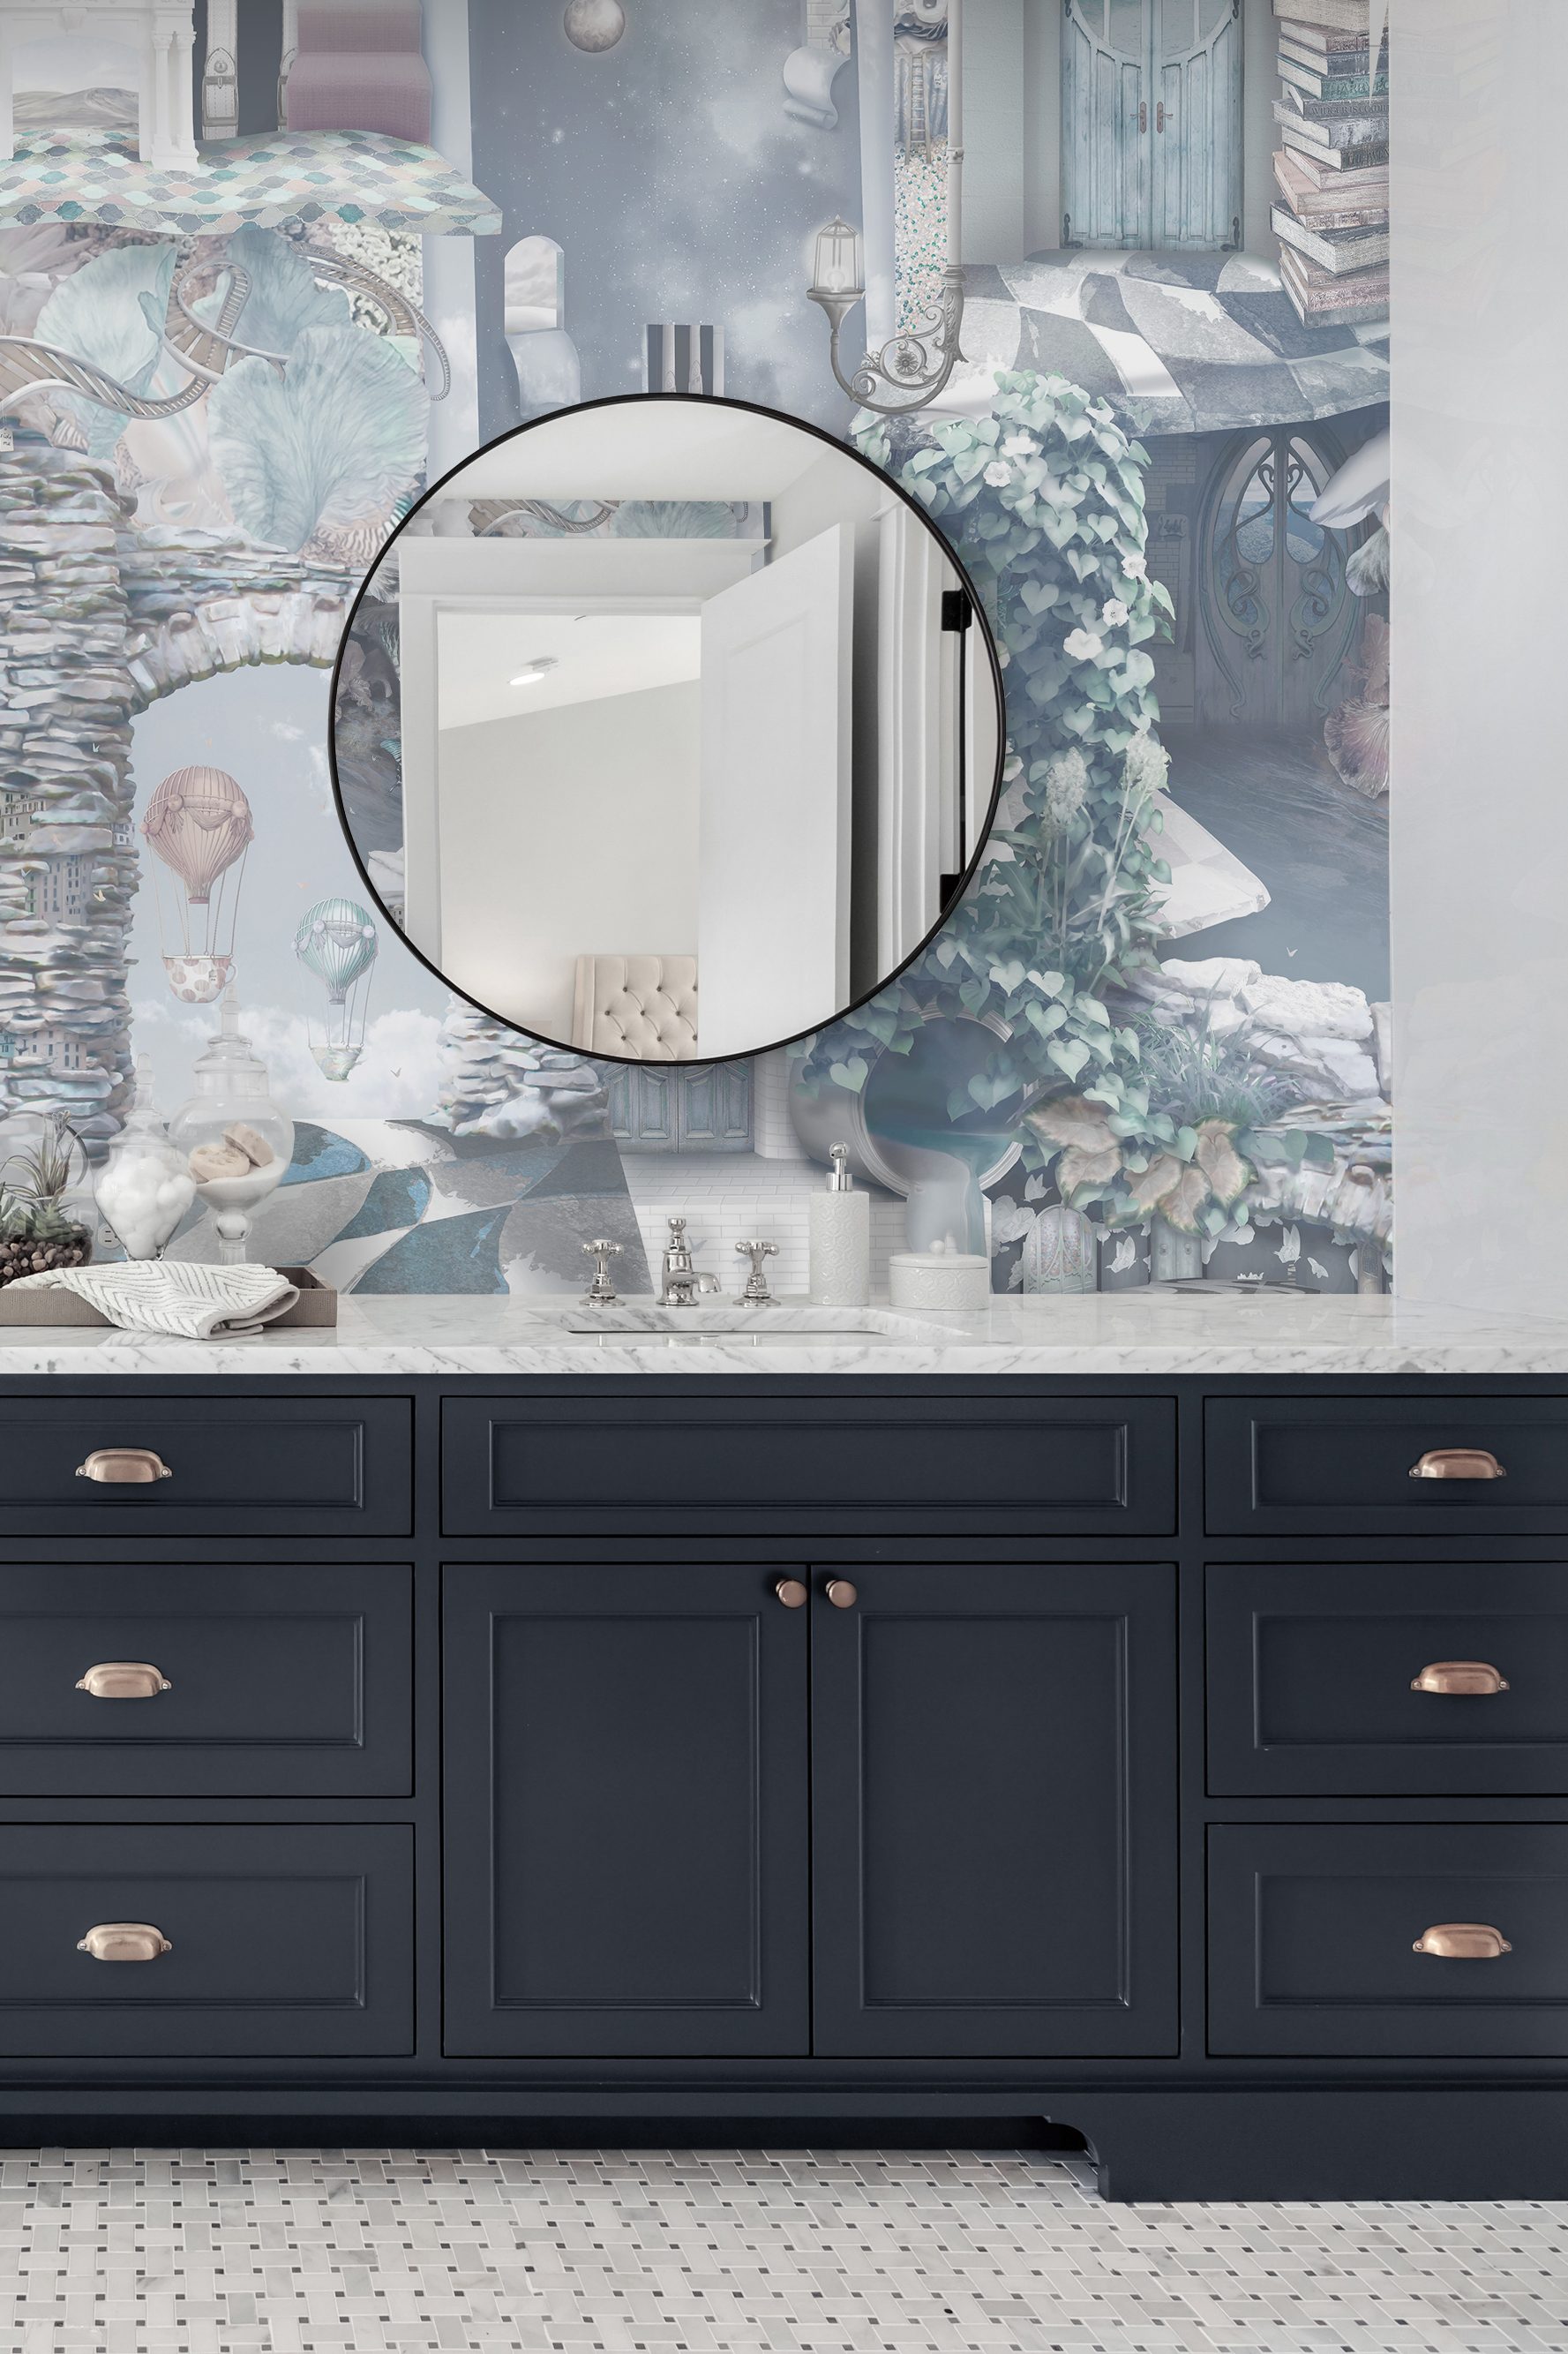 Statement bathroom Wallpaper vinyl powder room vanity navy blue silver grey